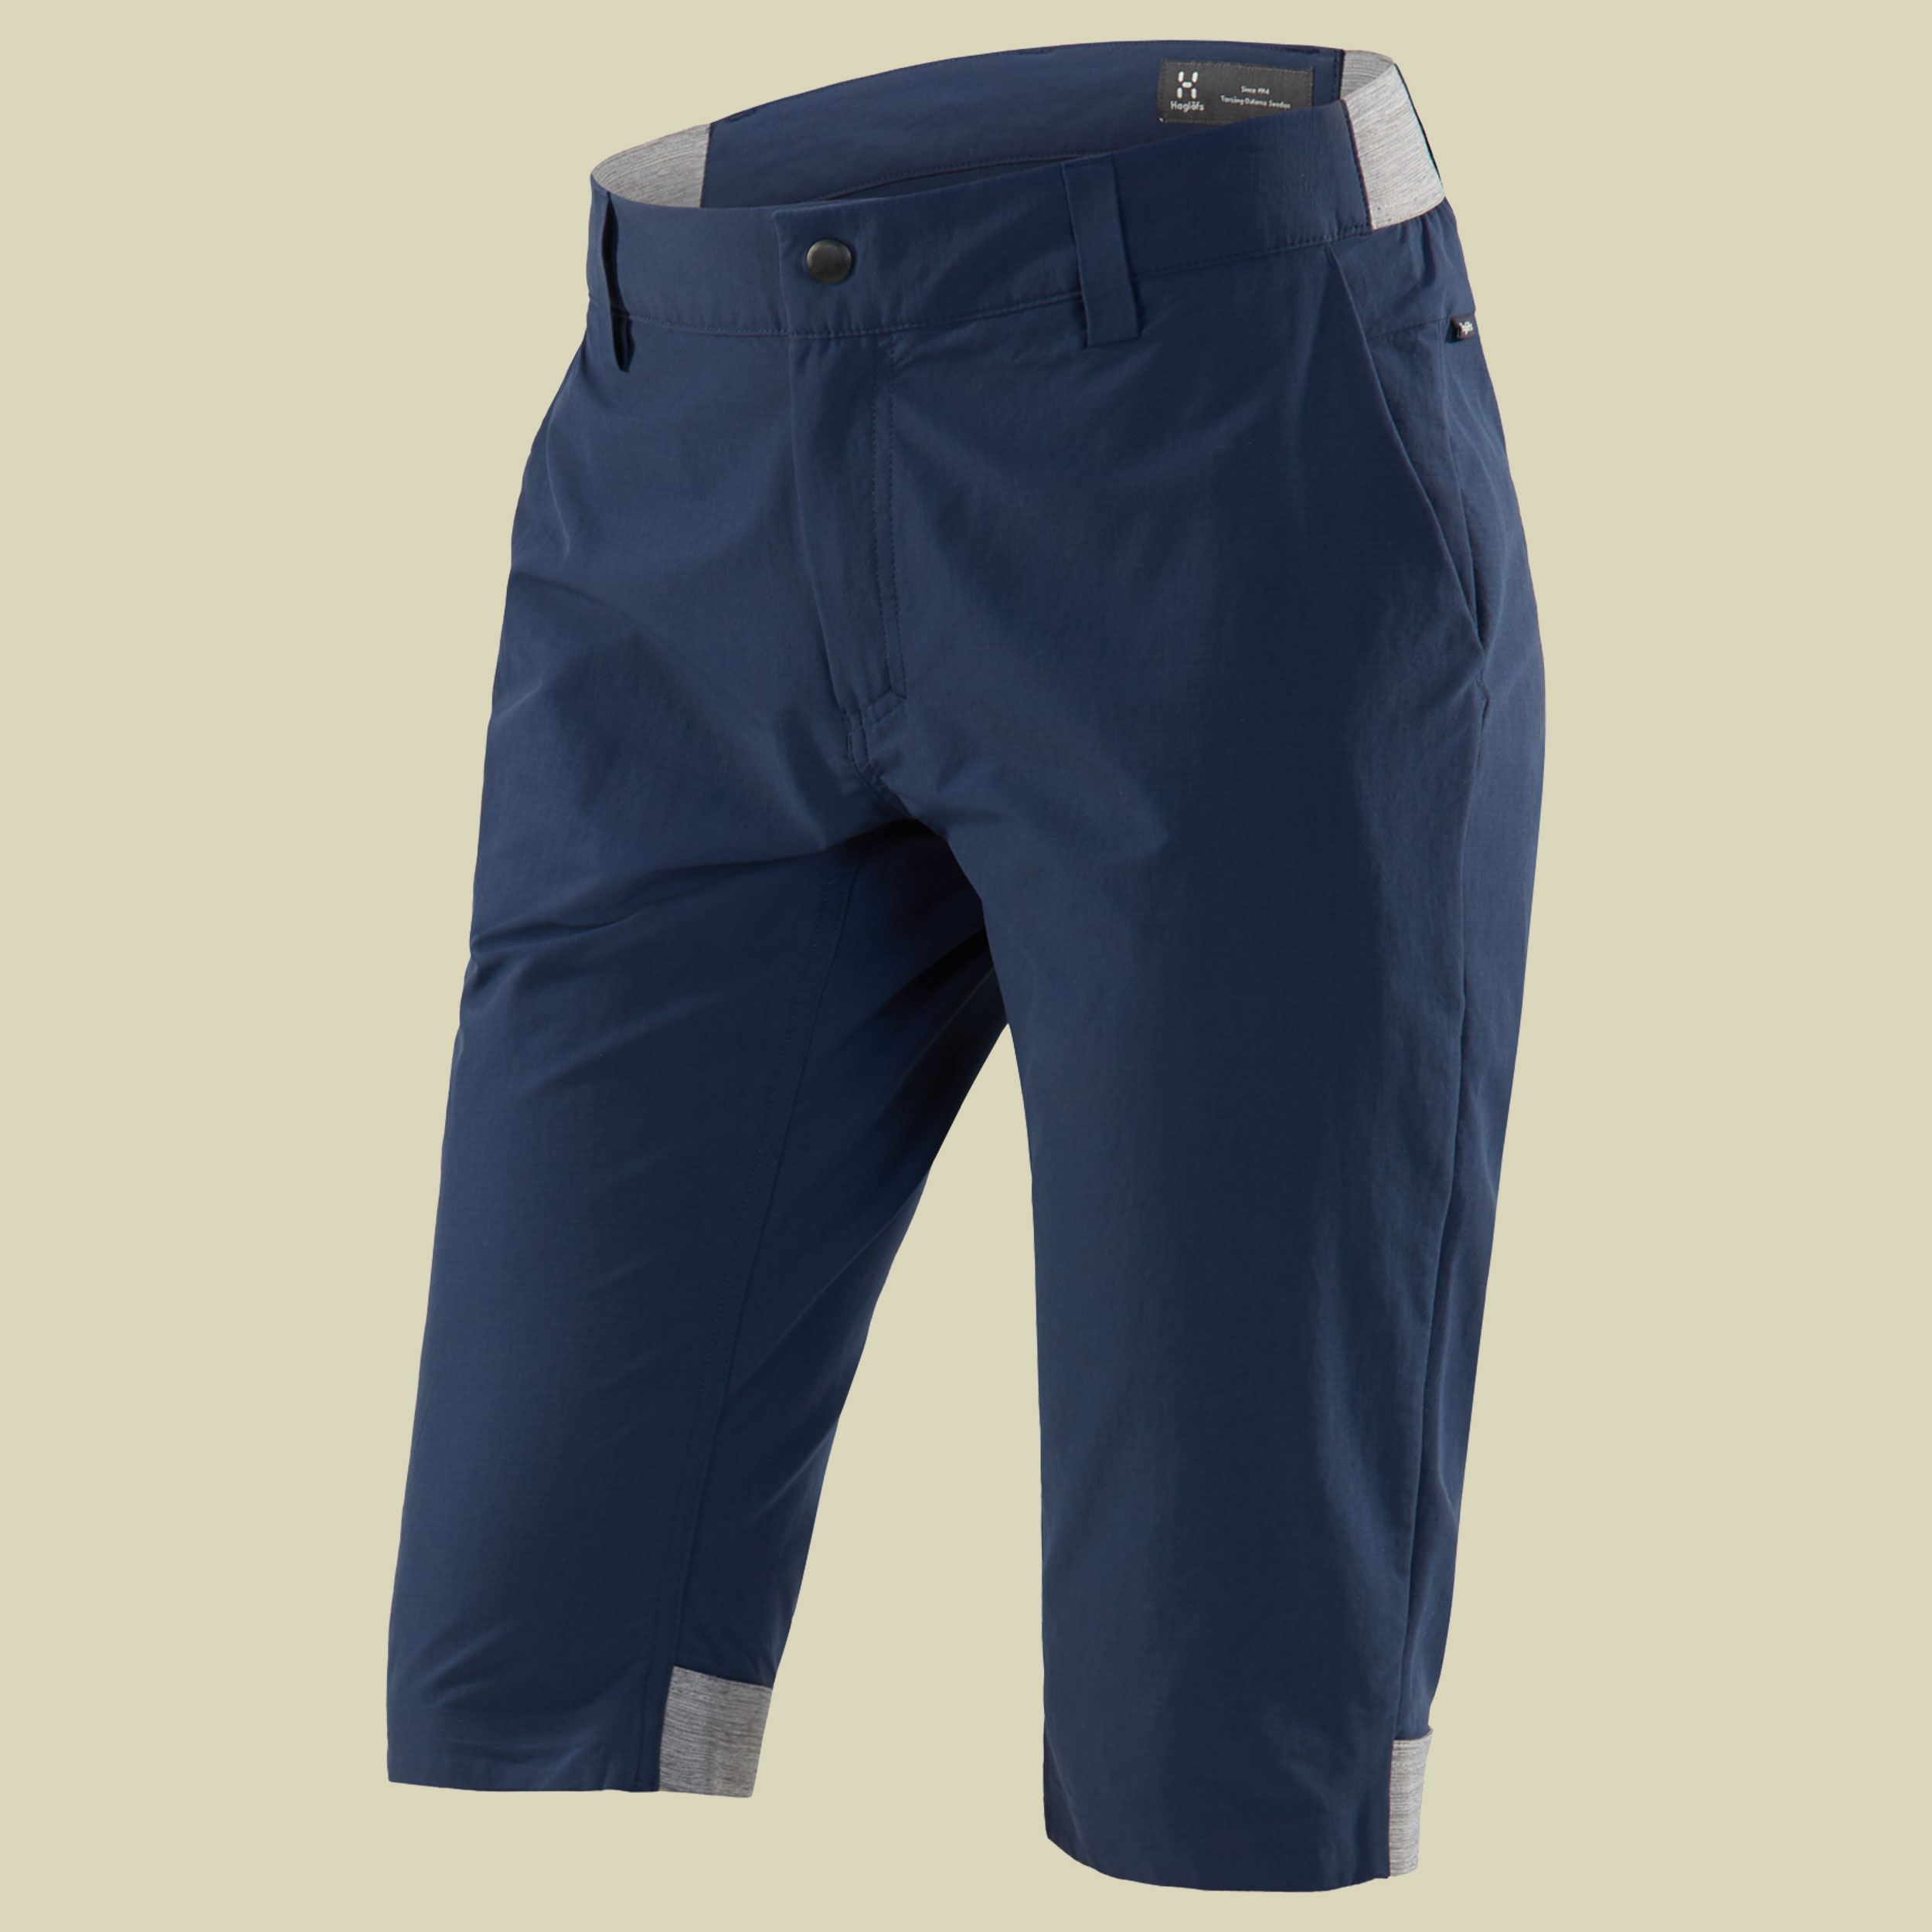 Amfibious Long Shorts Women Größe 40 Farbe tarn blue